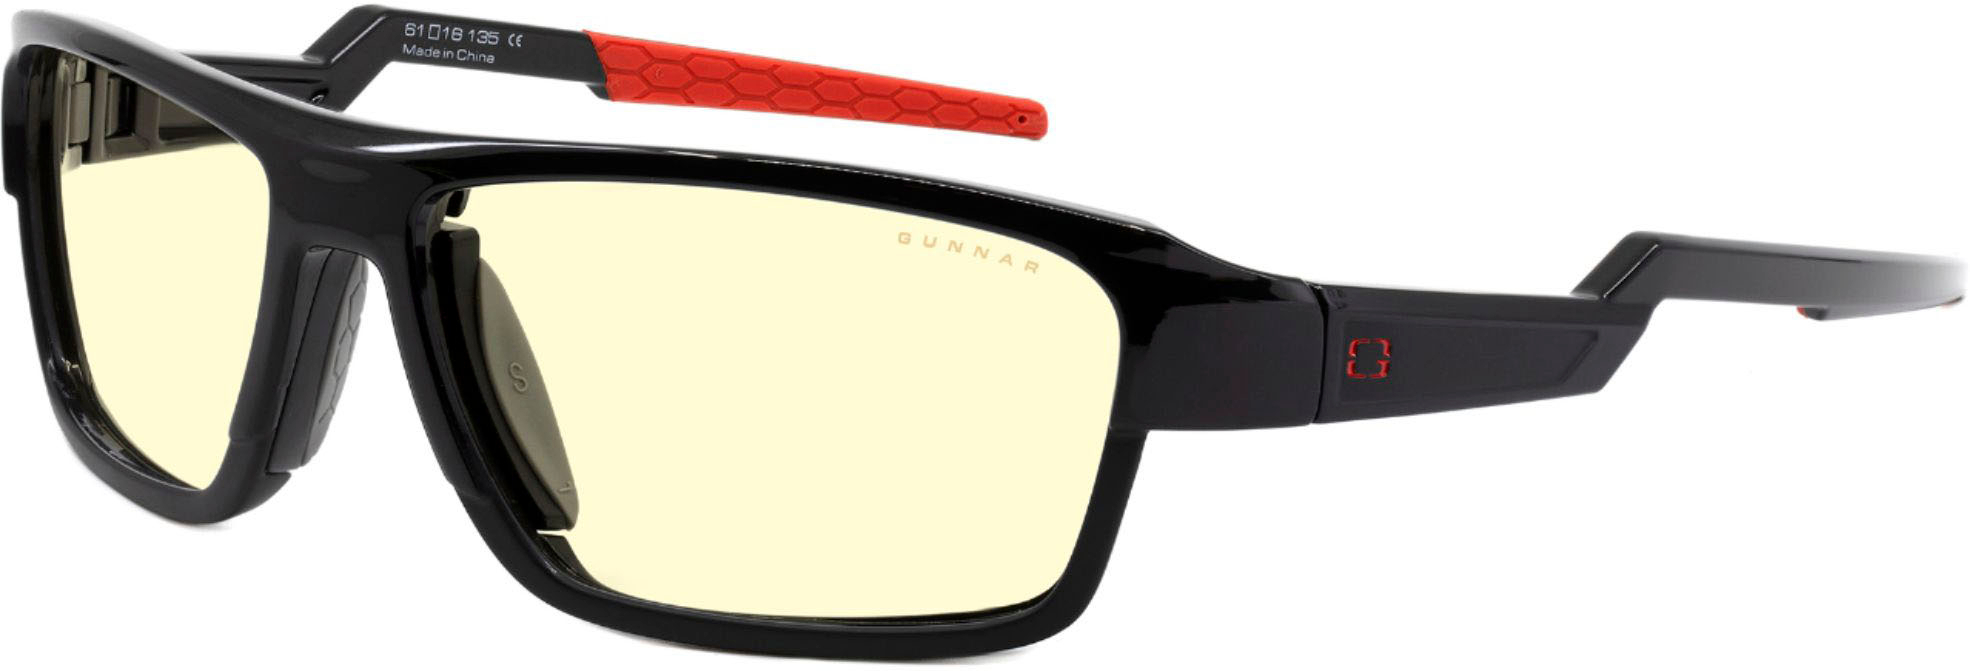 Angle View: GUNNAR - Gaming Glasses for Kids Age 12+  MOBA Razer Edition Onyx - Onyx